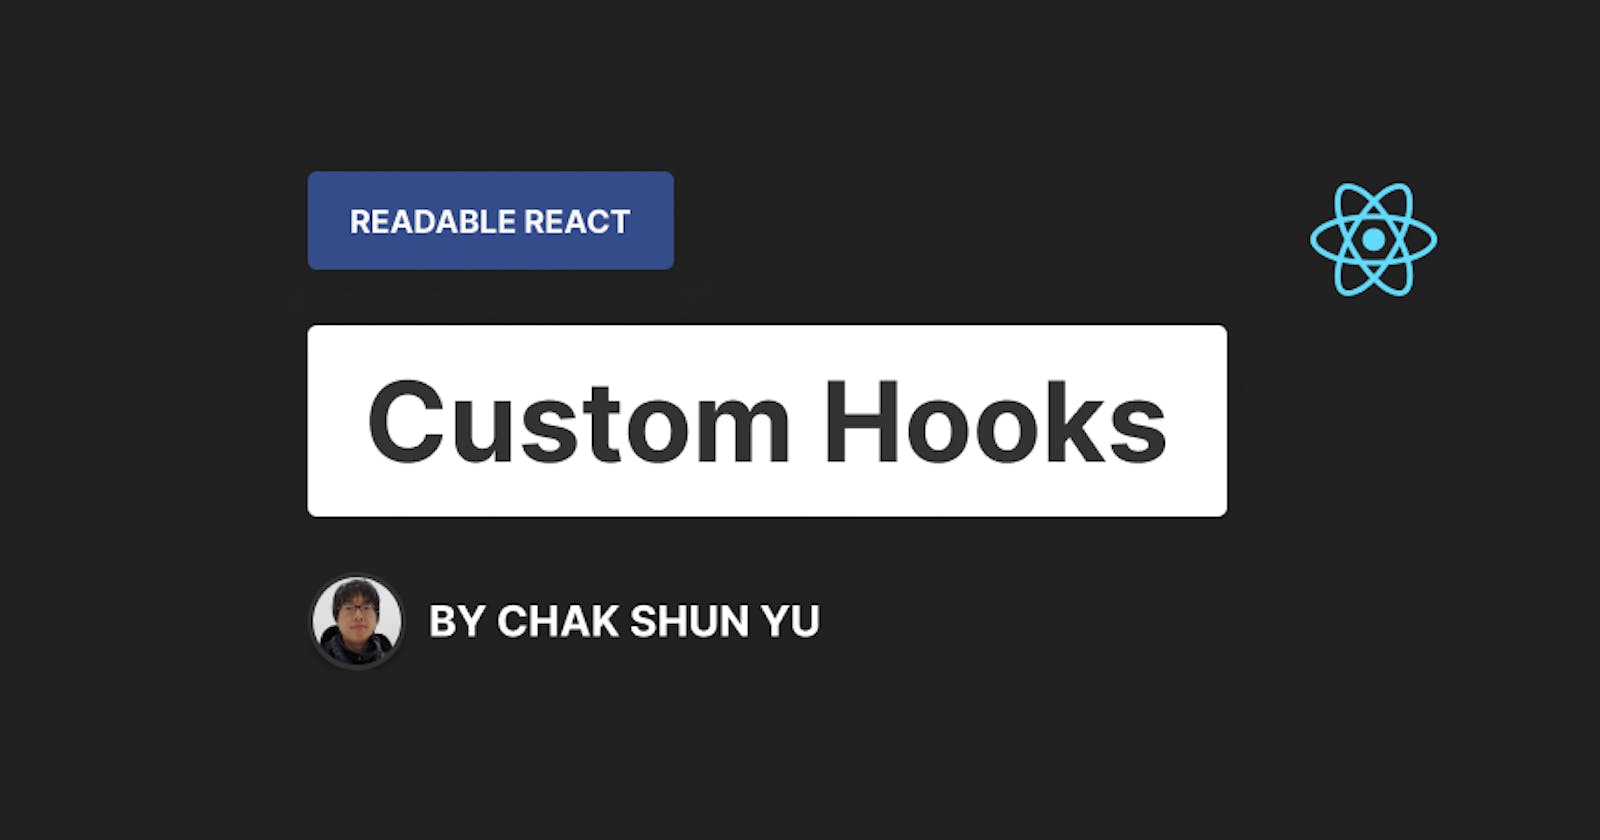 React Readability Analysis Of Implementing Custom Hooks